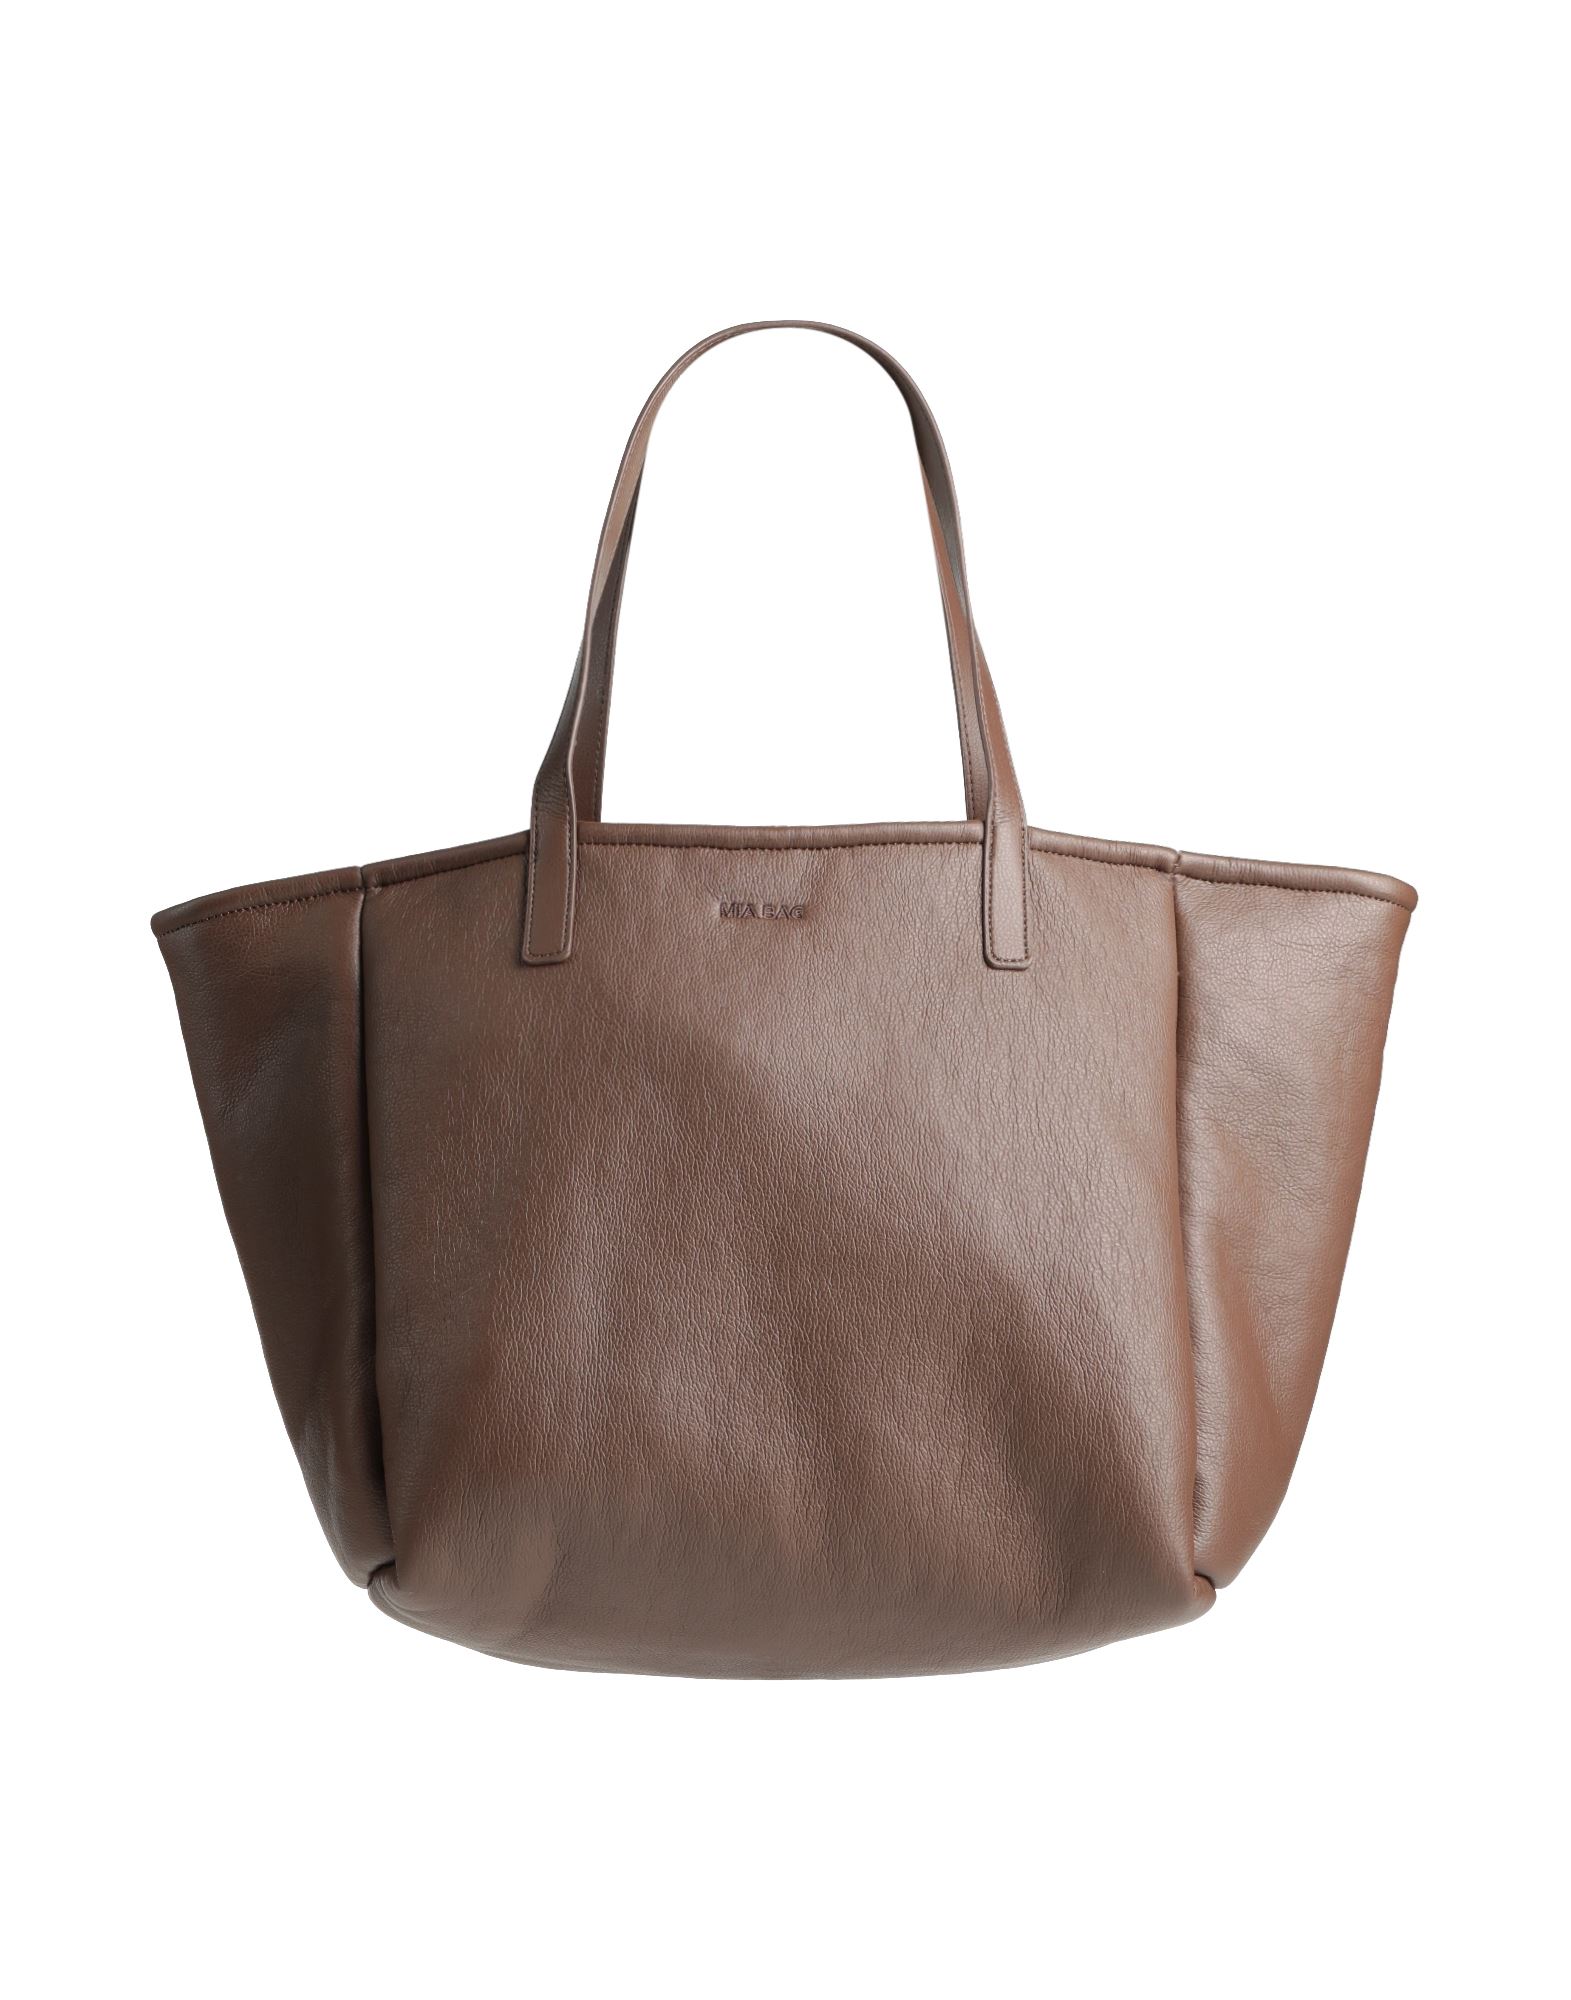 Mia Bag Handbags In Brown